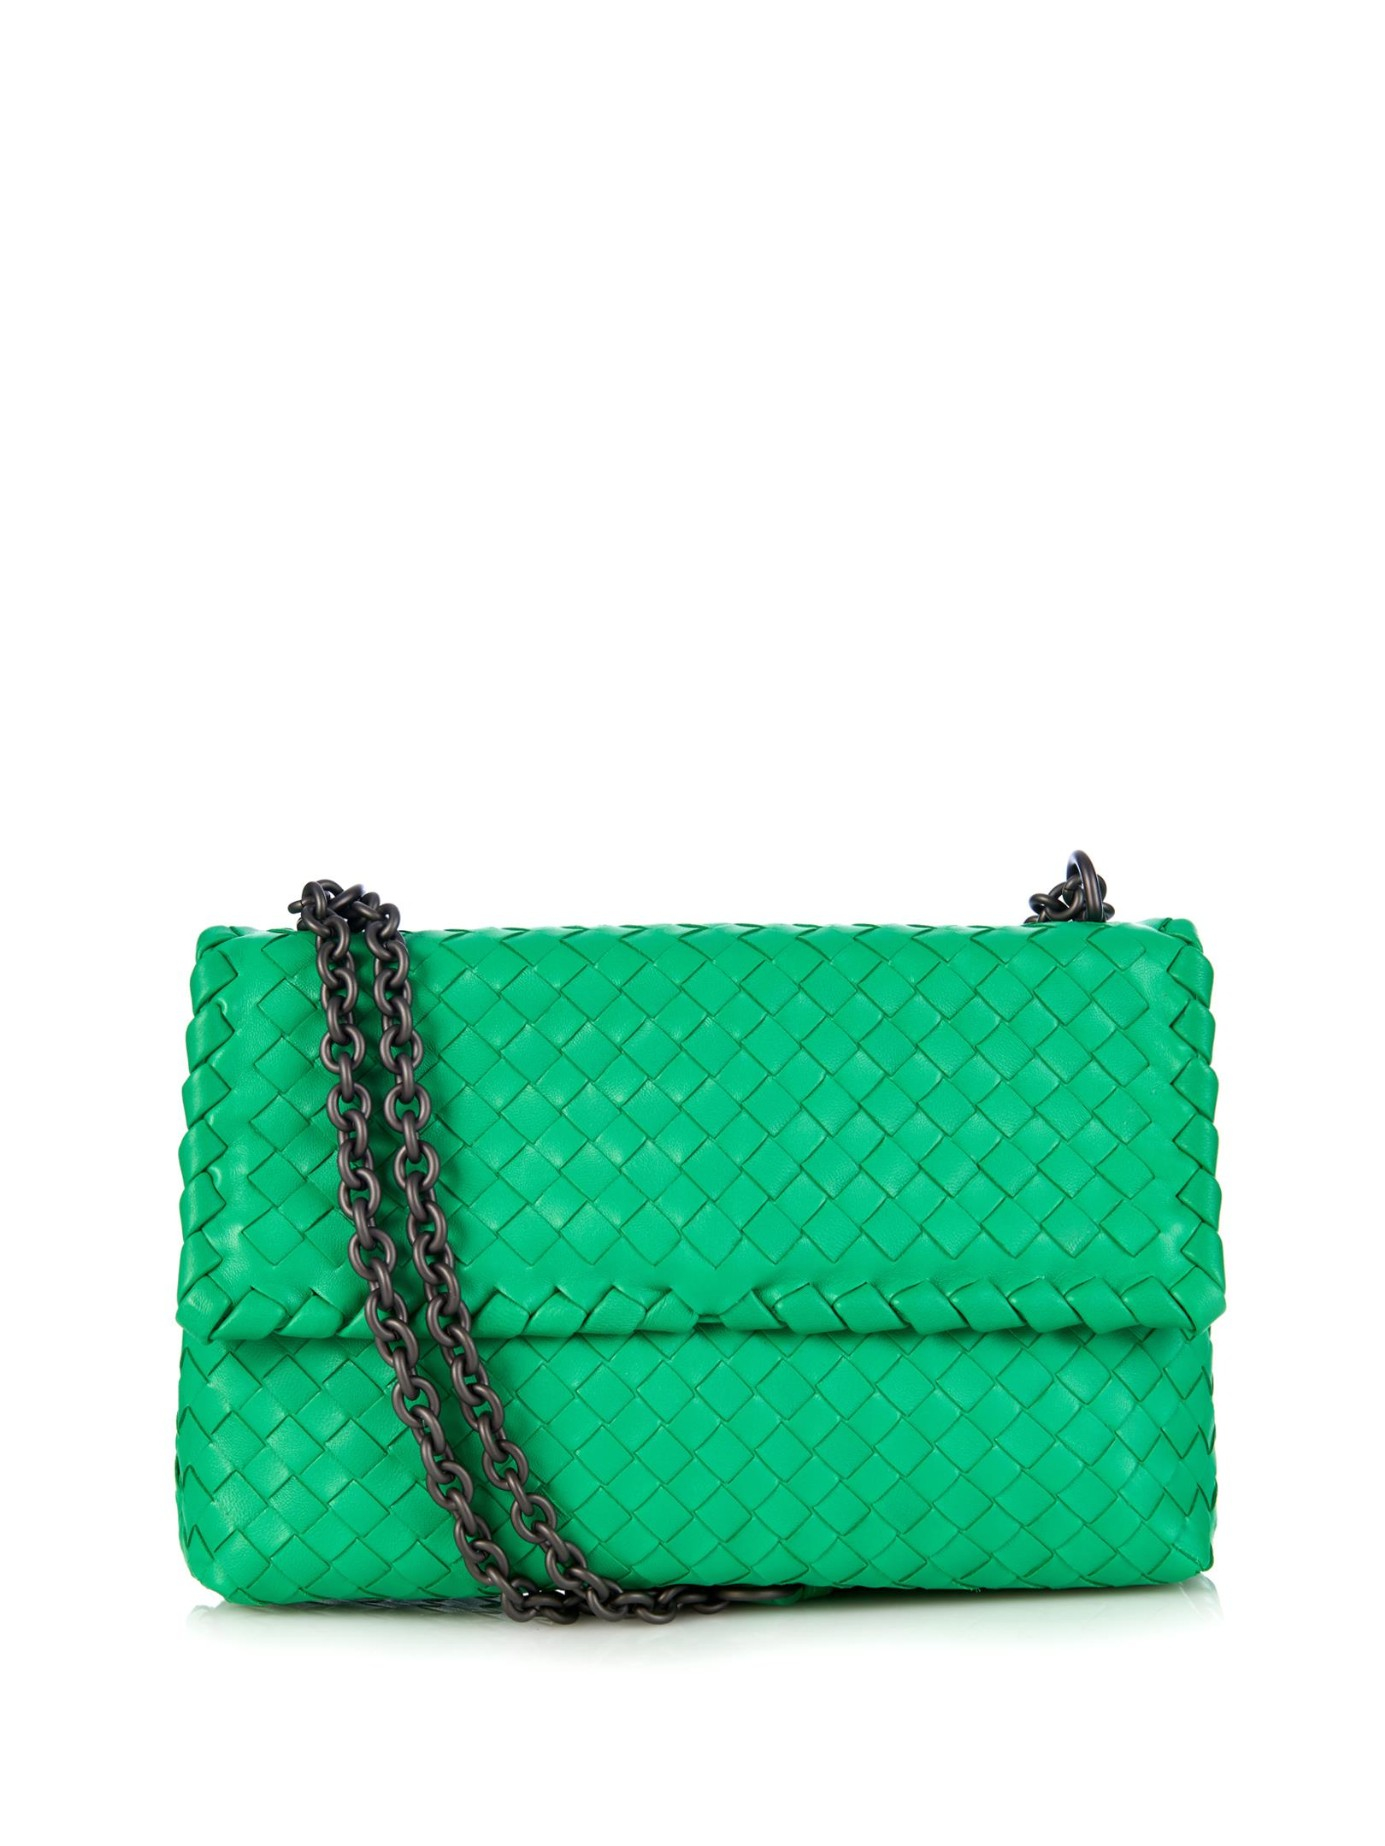 Bottega Veneta Olimpia Small Intrecciato Leather Shoulder Bag in Green ...